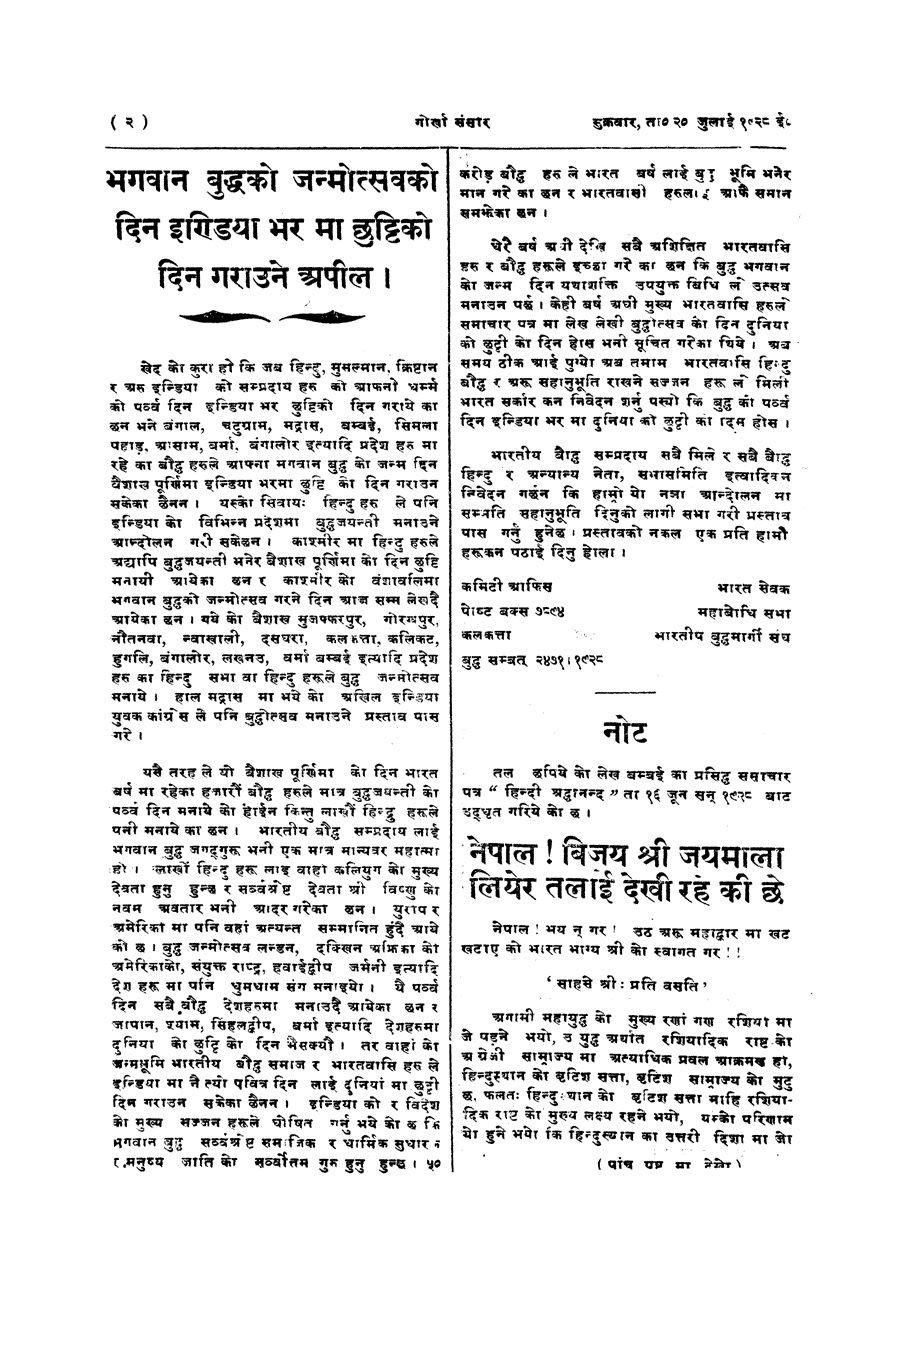 Gorkha Sansar, 20 July 1928, page 2